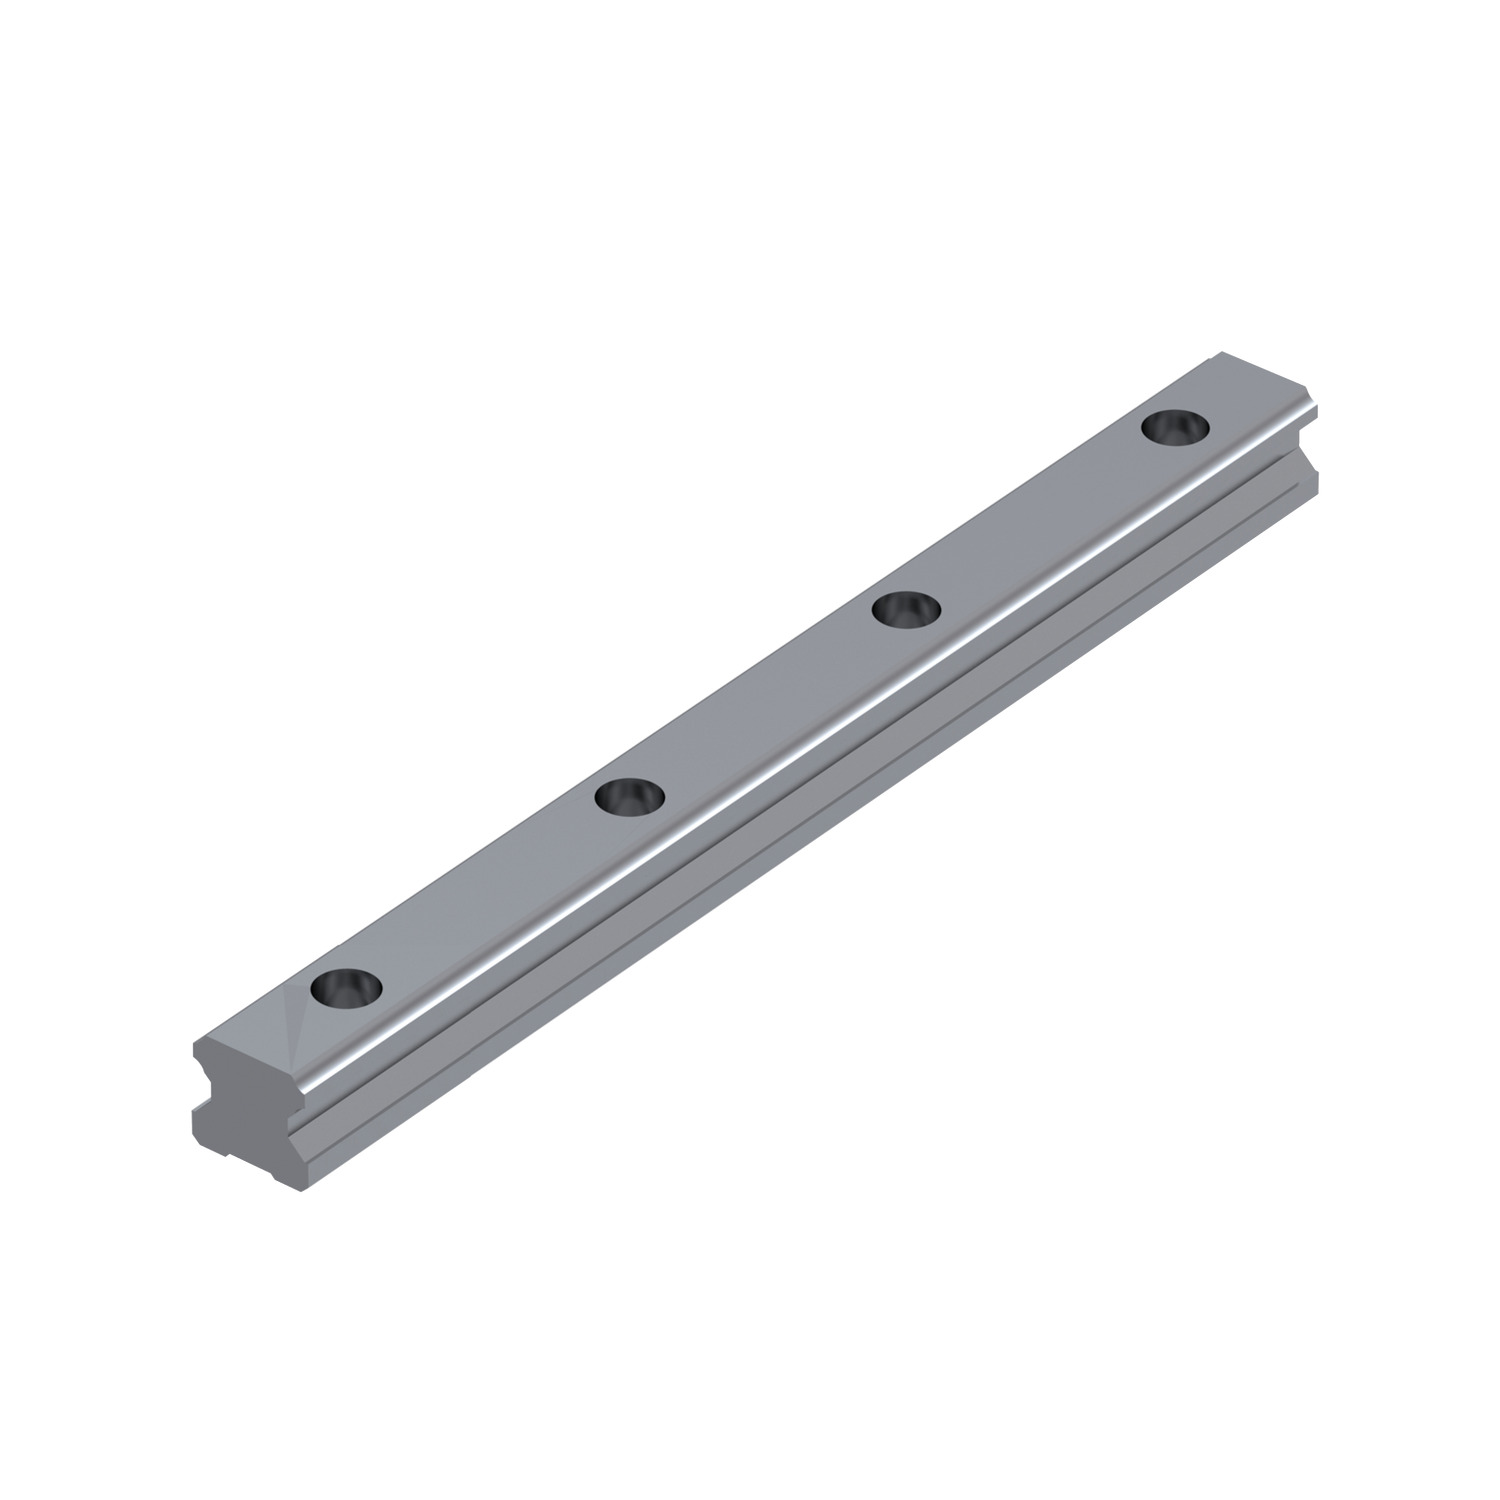 Product L1016.45, 45mm Linear Guide Rail standard / 